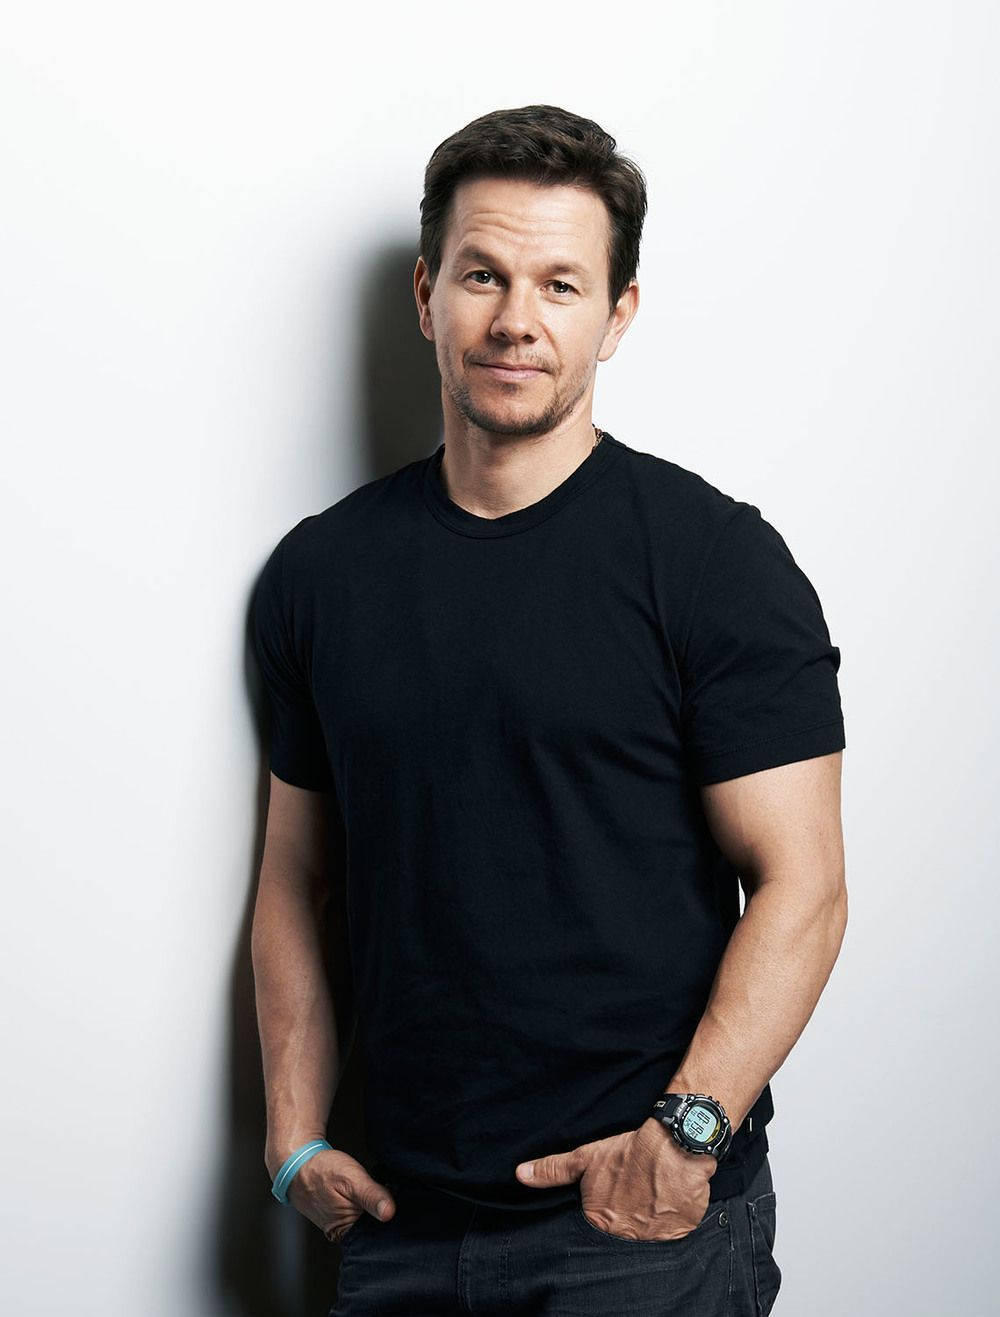 Mark Wahlberg In Black Shirt Background